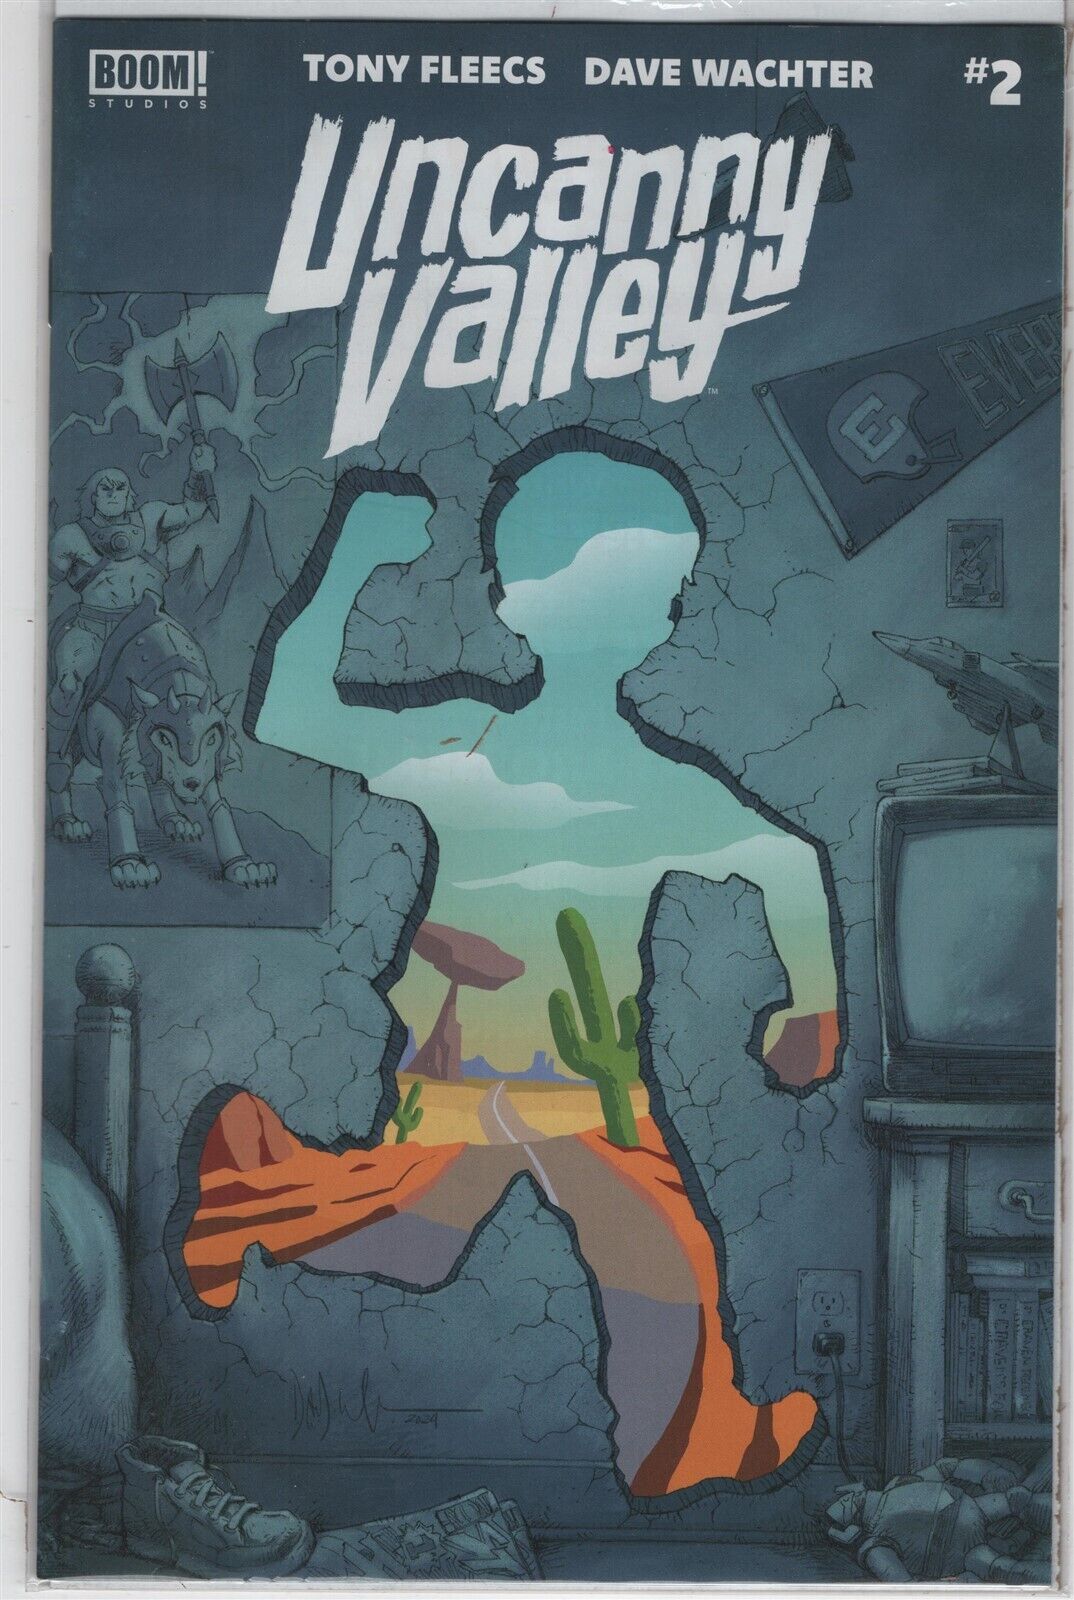 Uncanny Valley #1 Dave Wachter Regular Cover (Boom Studios)